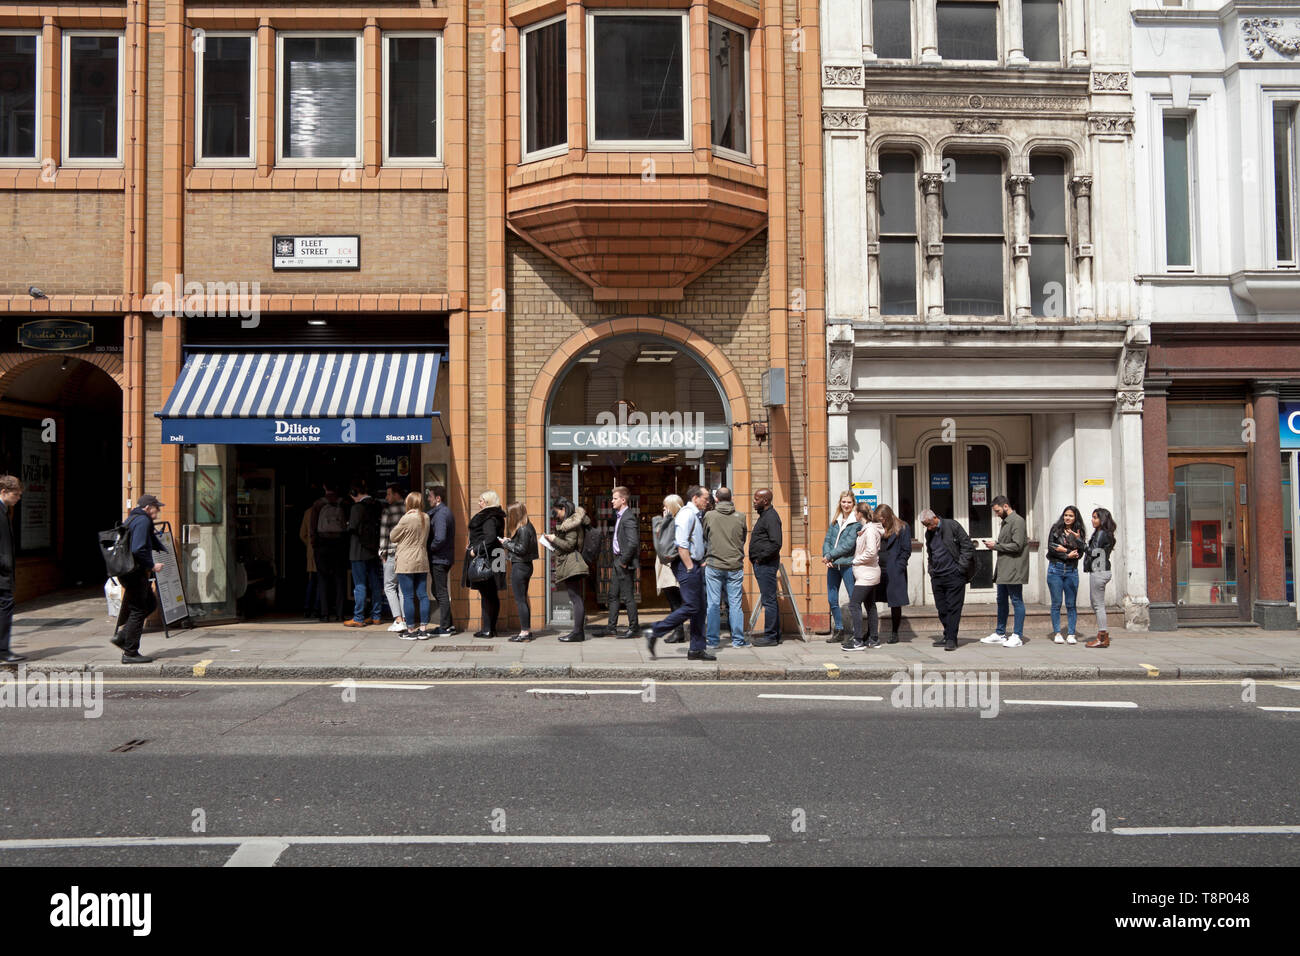 Queuing for Lunch, Dilieto Sandwich Bar, Fleet Street, England, UK, Europe Stock Photo